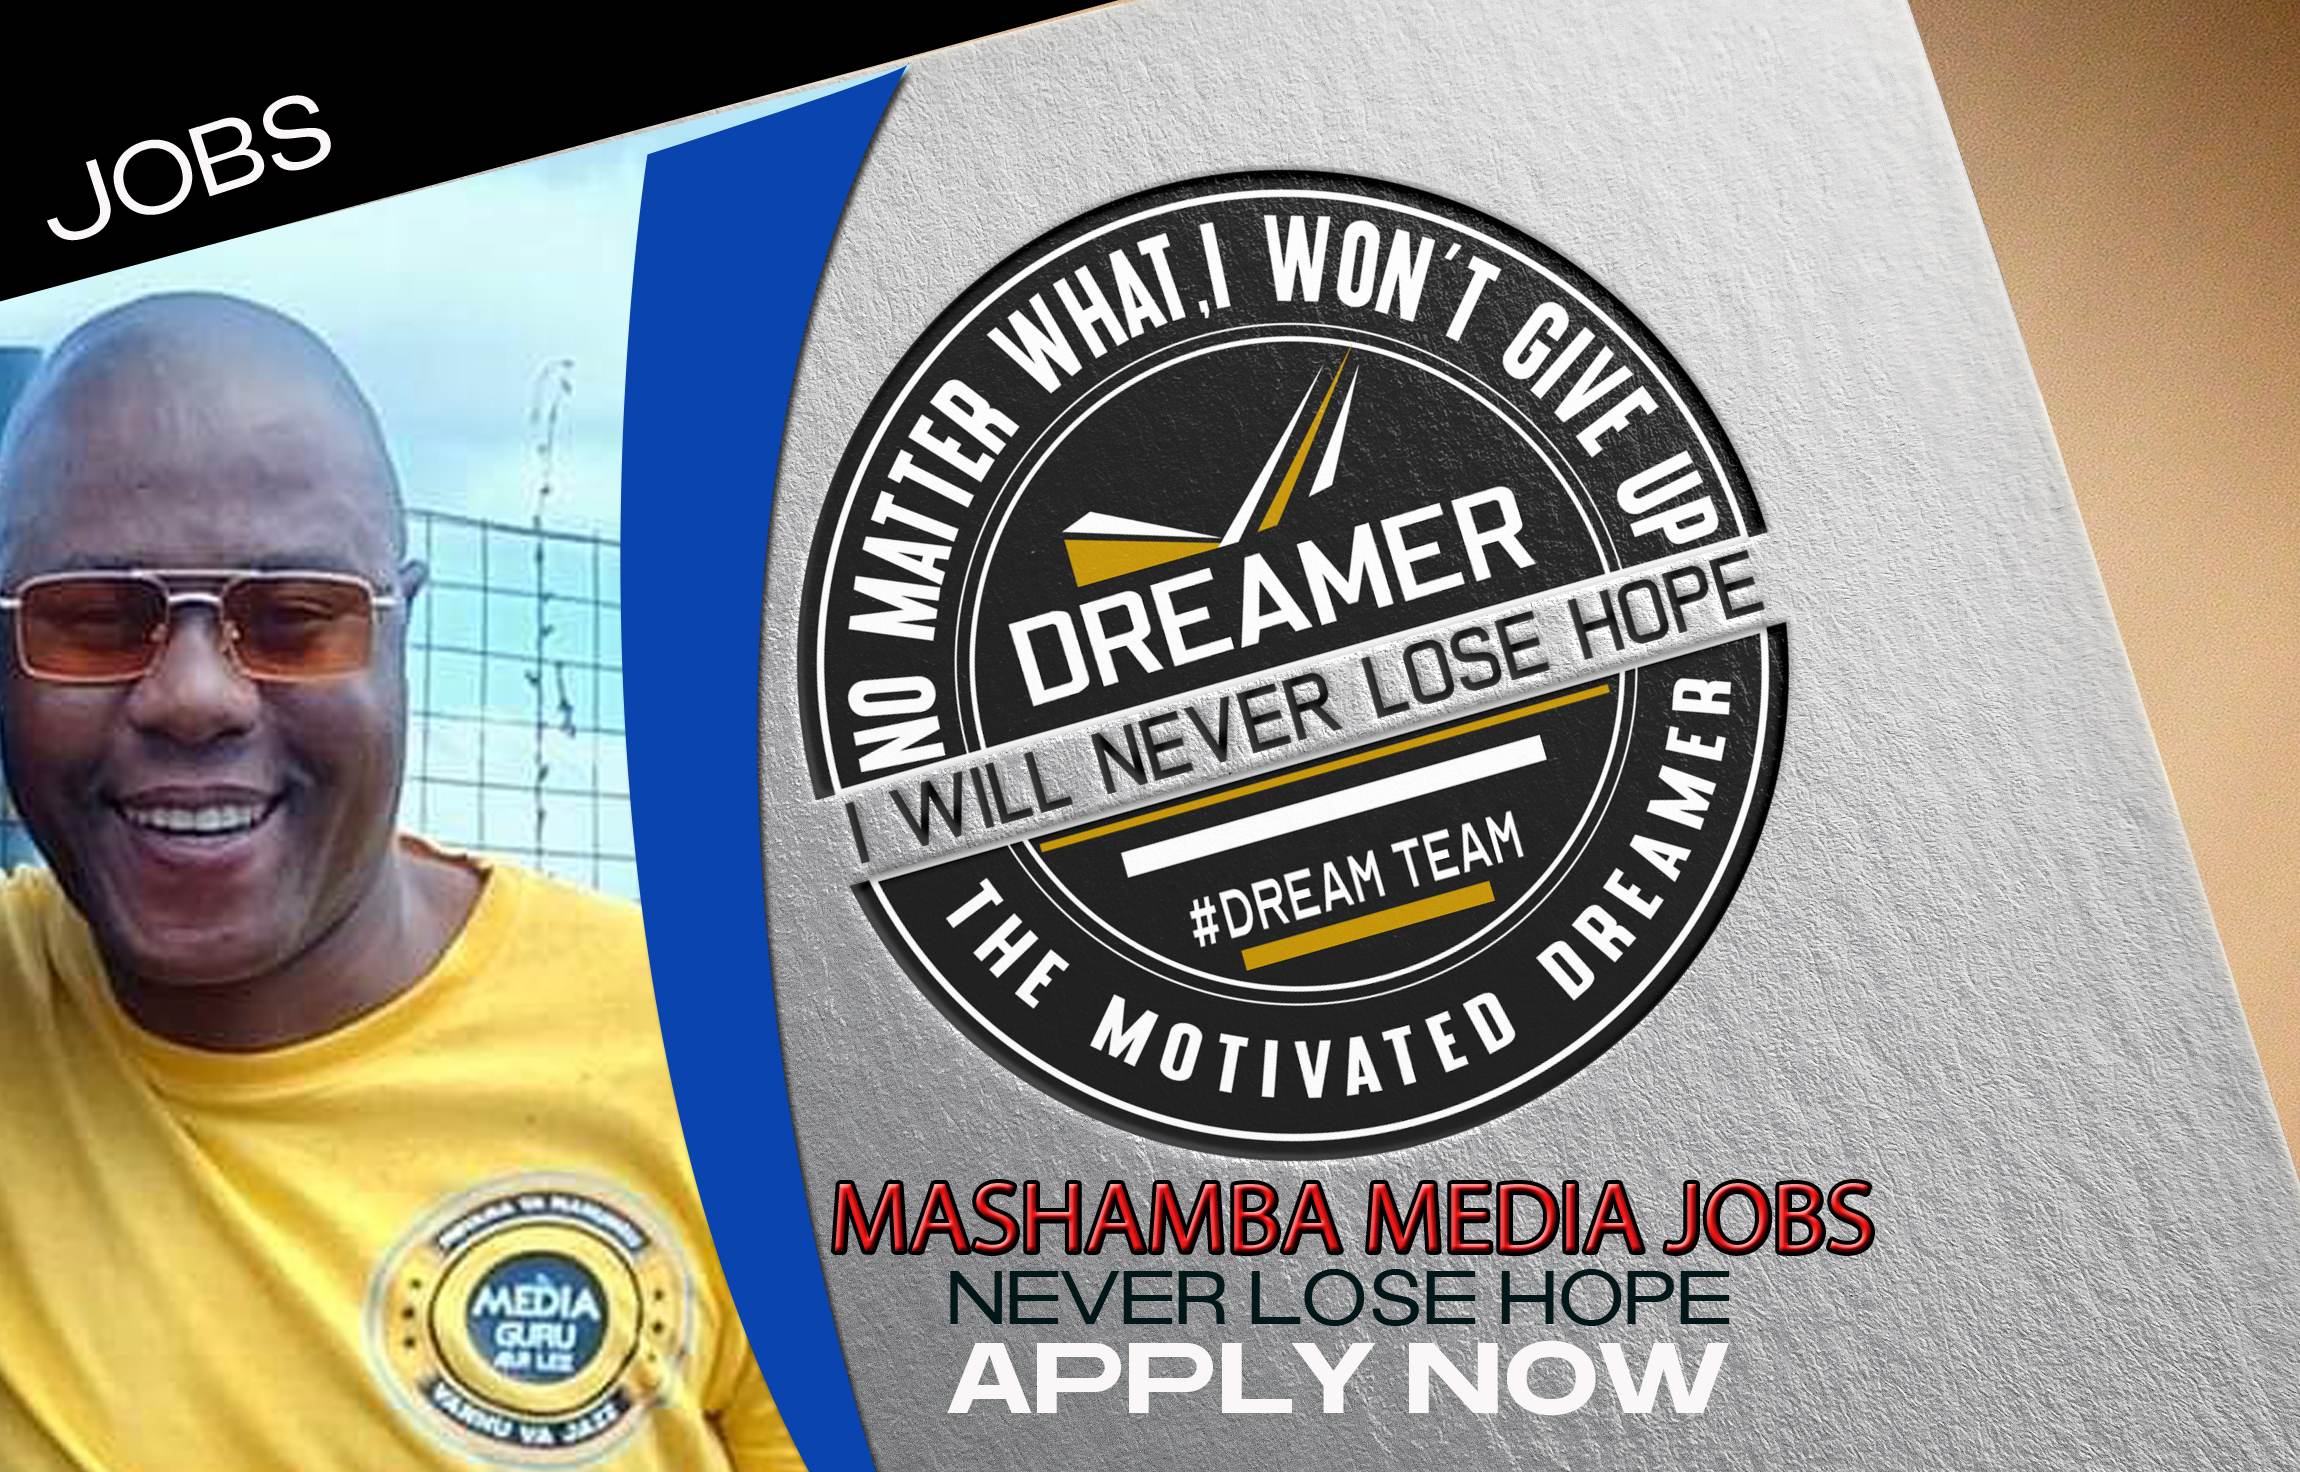 MASHAMBA MEDIA JOB 4. DREAMERS NEVER LOSE HOPE!!